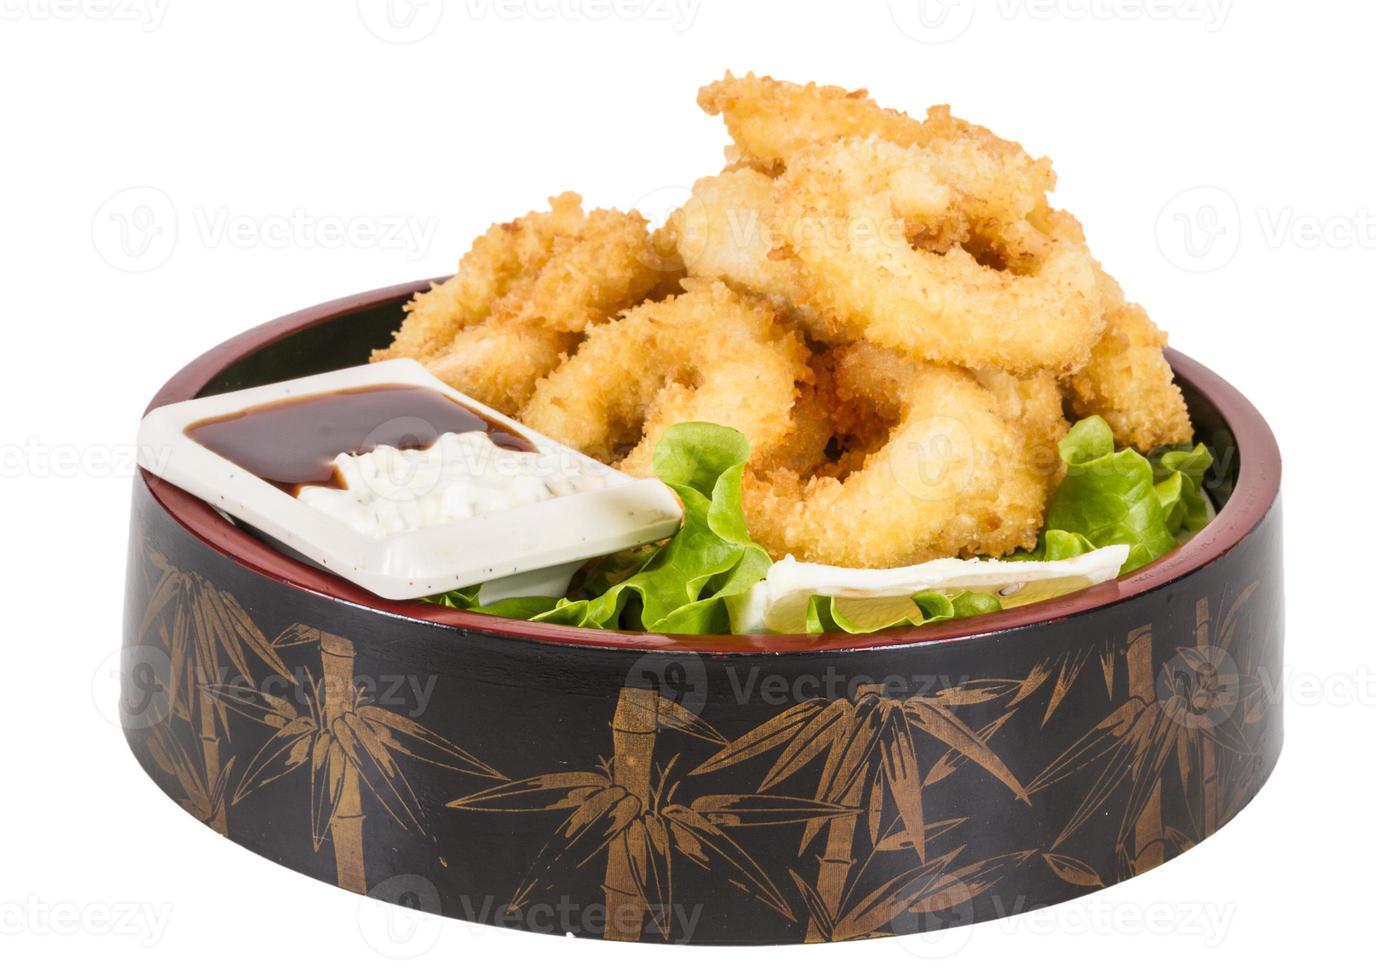 calamars frits à la pâte profonde avec salade verte photo